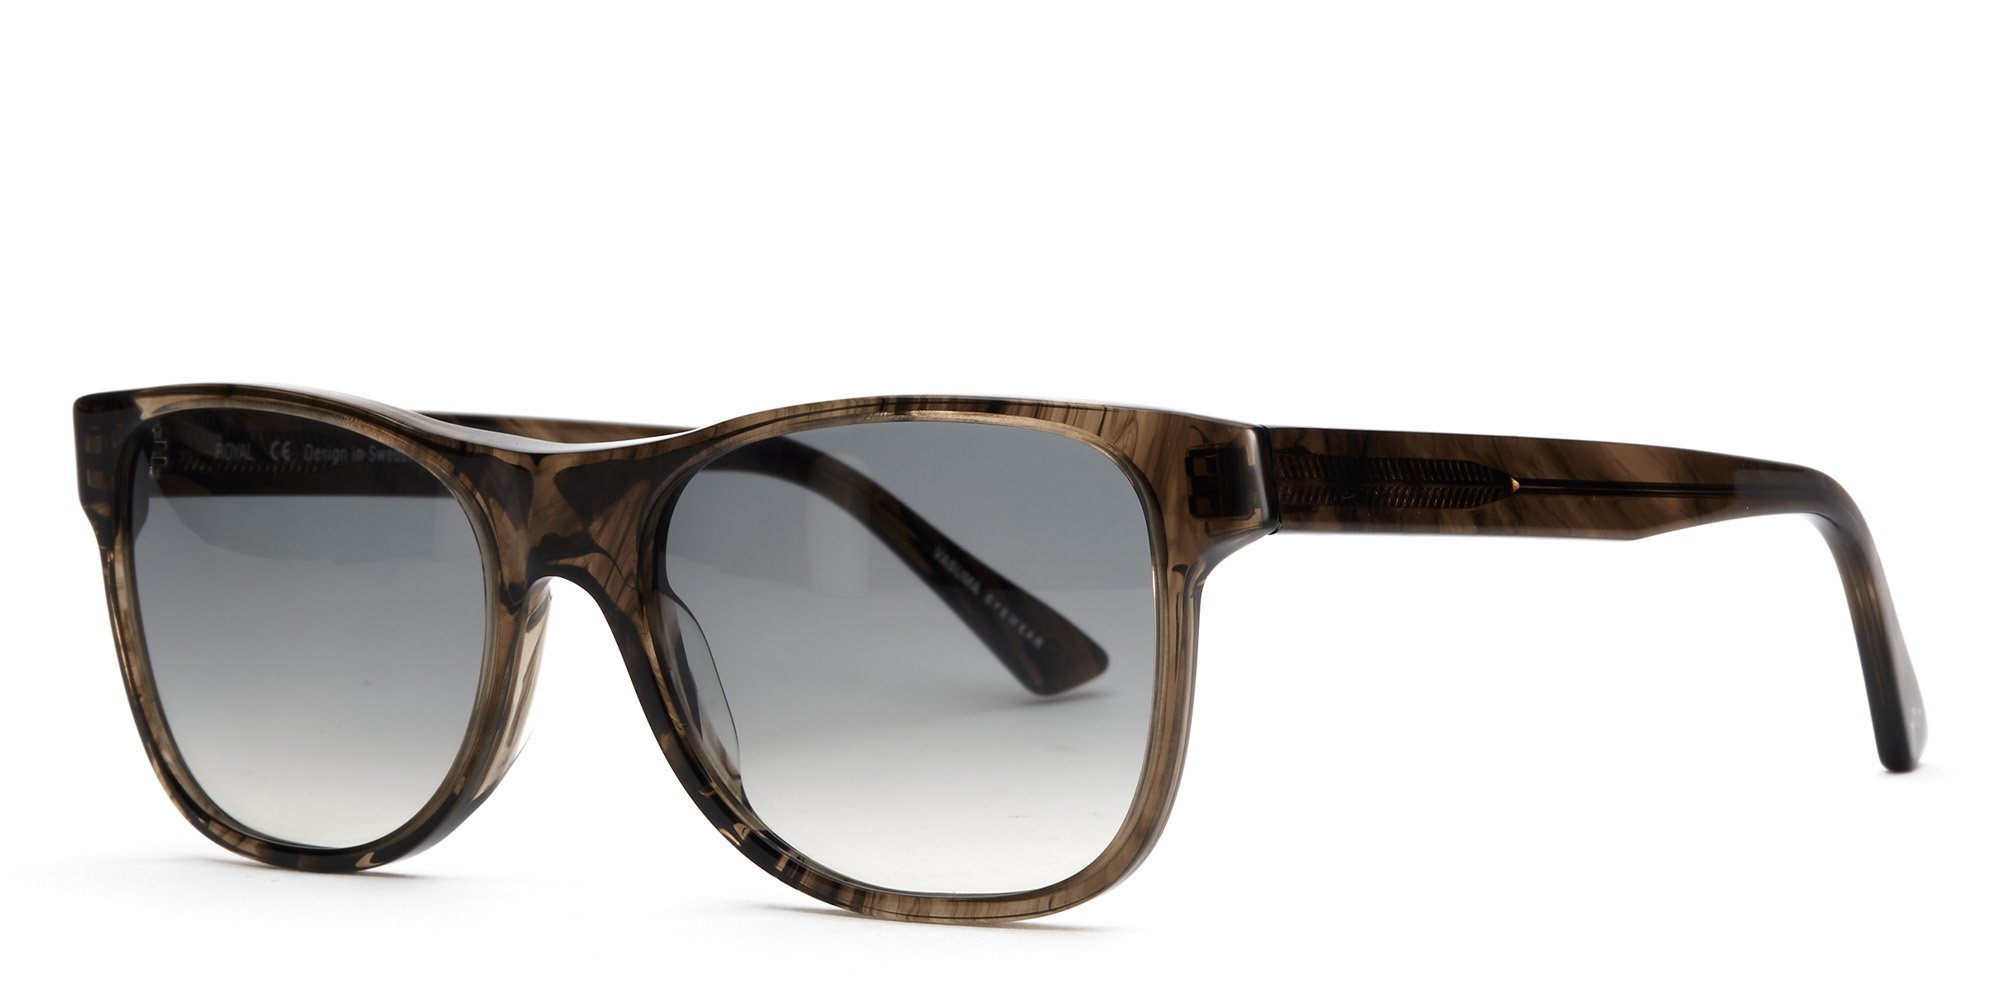 Buy ROYAL SON Vintage Narrow Rectangular Sun glasses For Men Women Driving  UV Protection - Black at Amazon.in